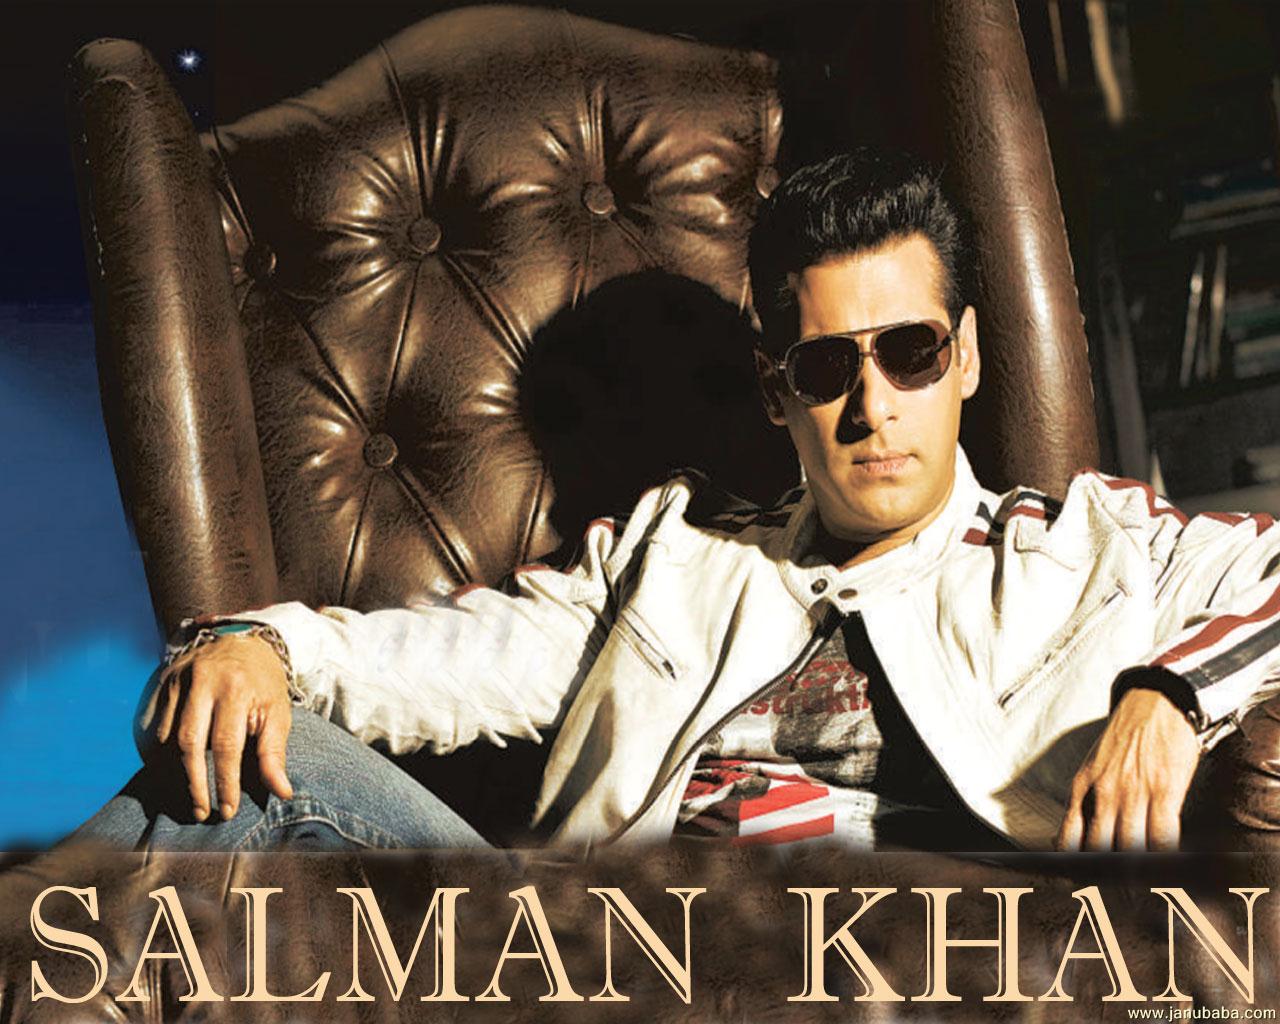 Salman khan wallpaper - 1280x1024 Janubaba.com